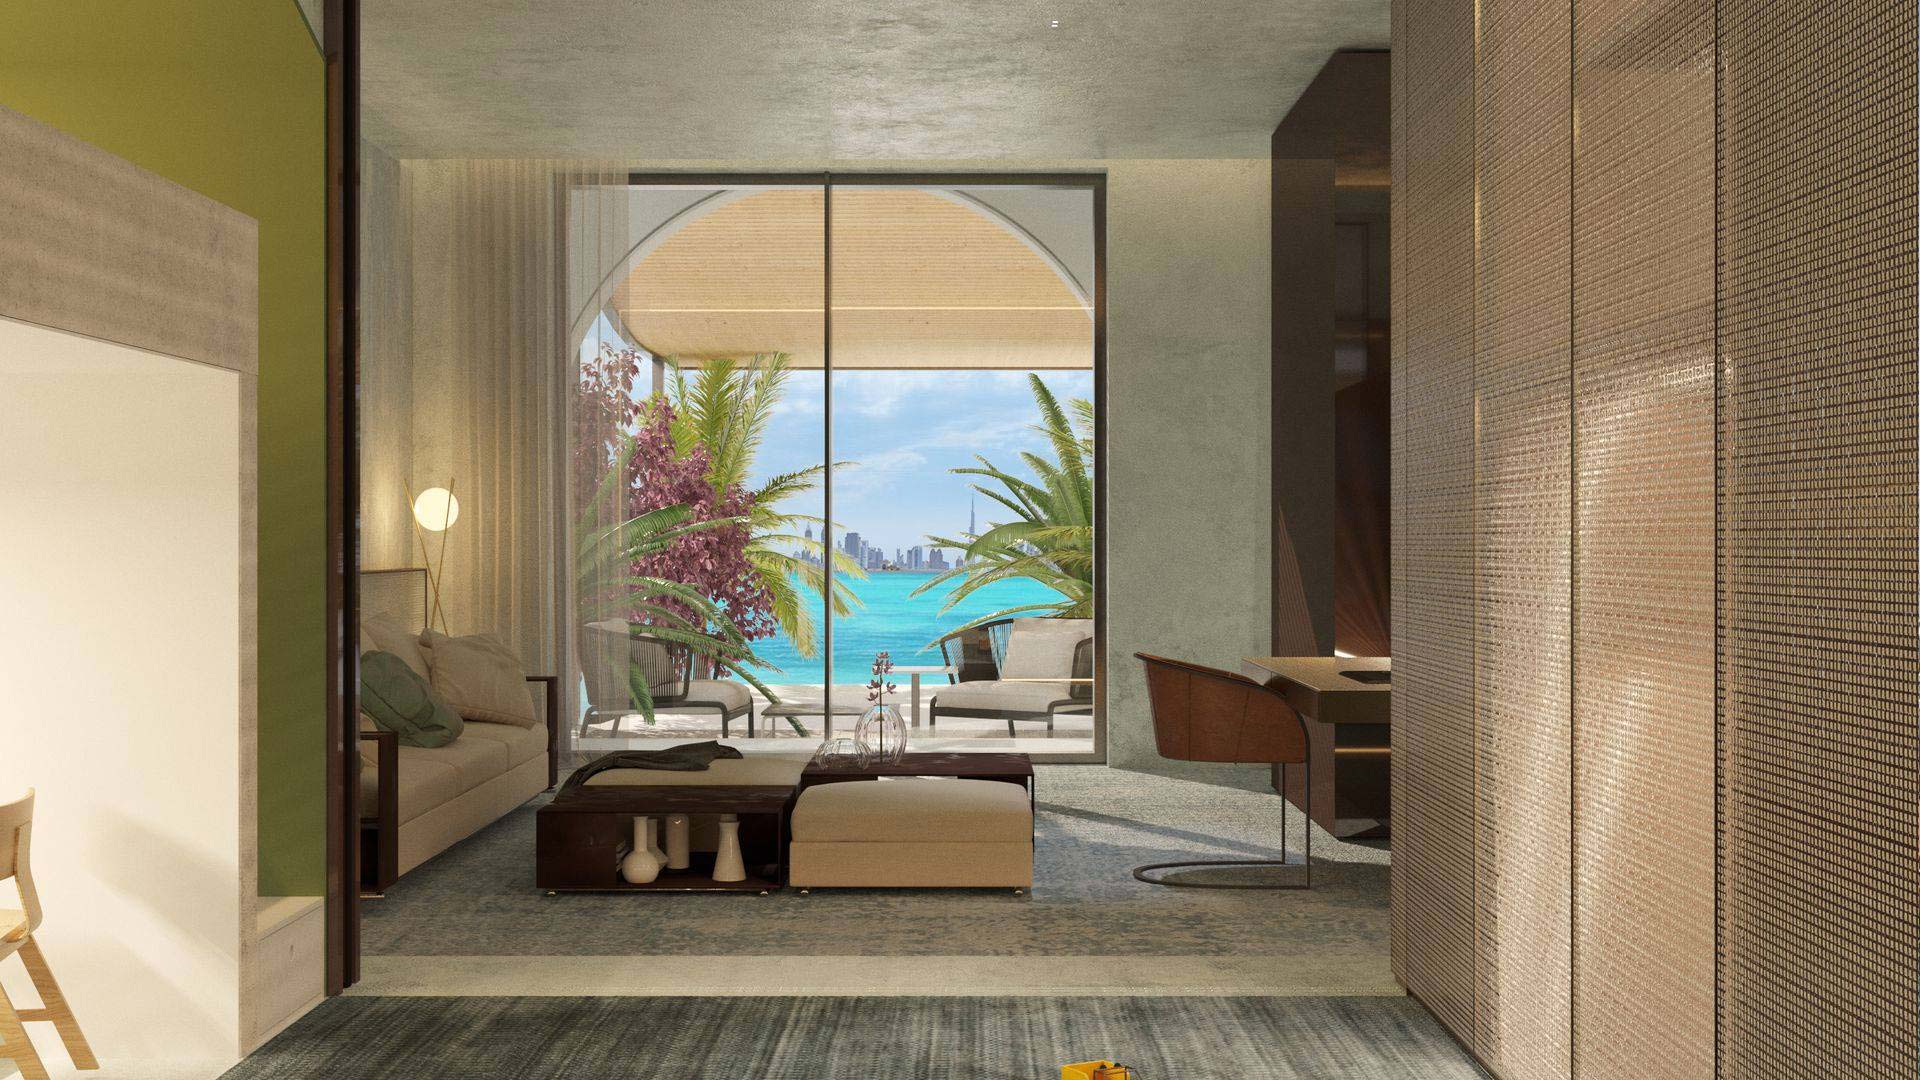 Apartment for sale in The World Islands, Dubai, UAE, 1 bedroom, 67 m², No. 25151 – photo 4